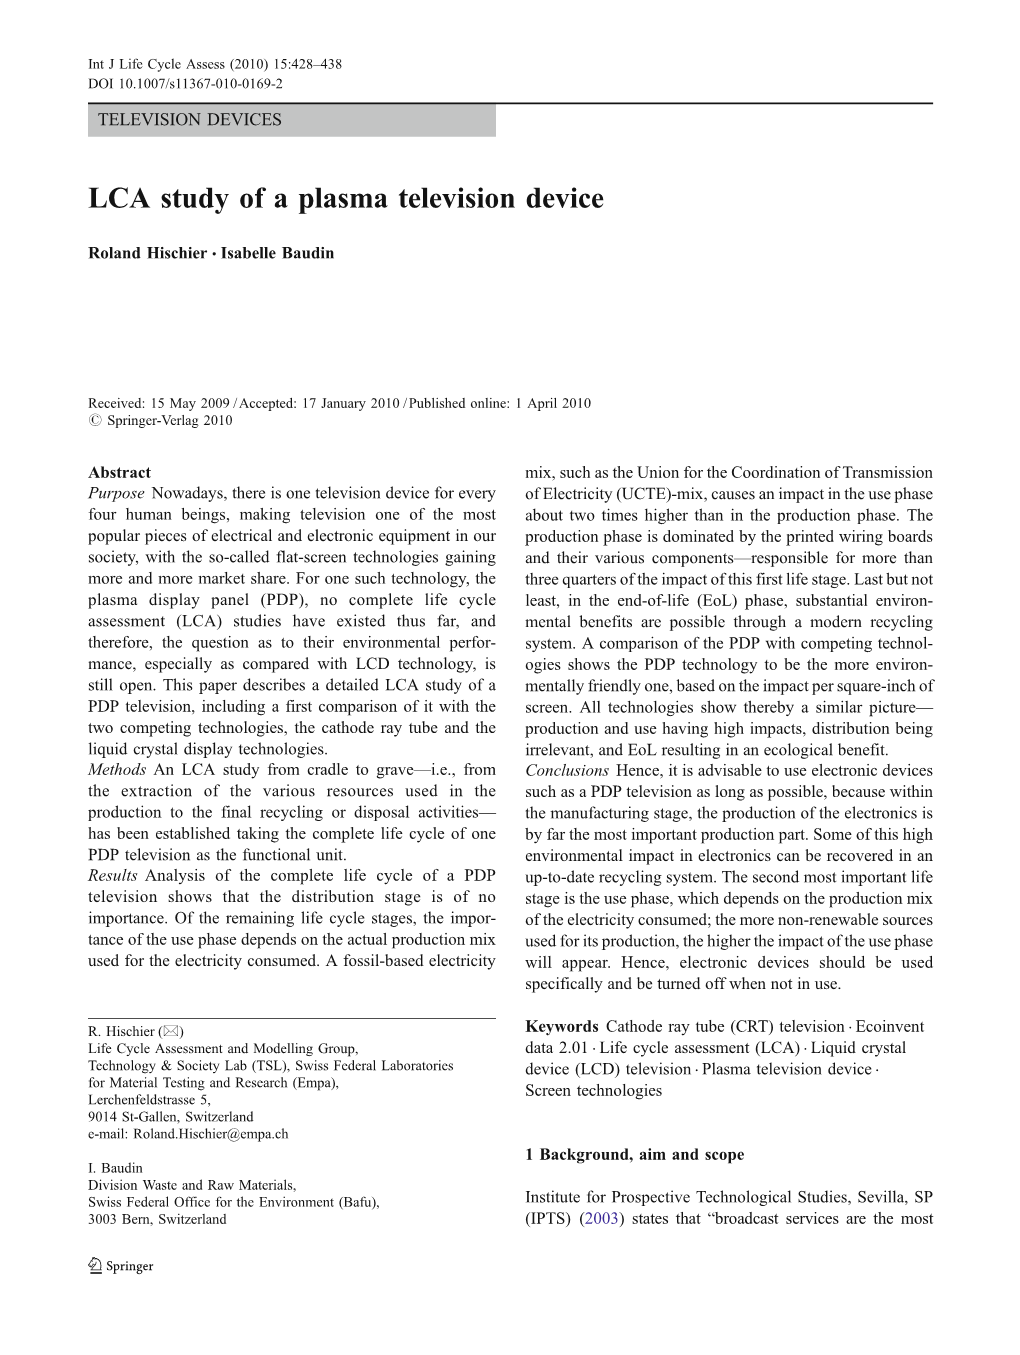 LCA Study of a Plasma Television Device